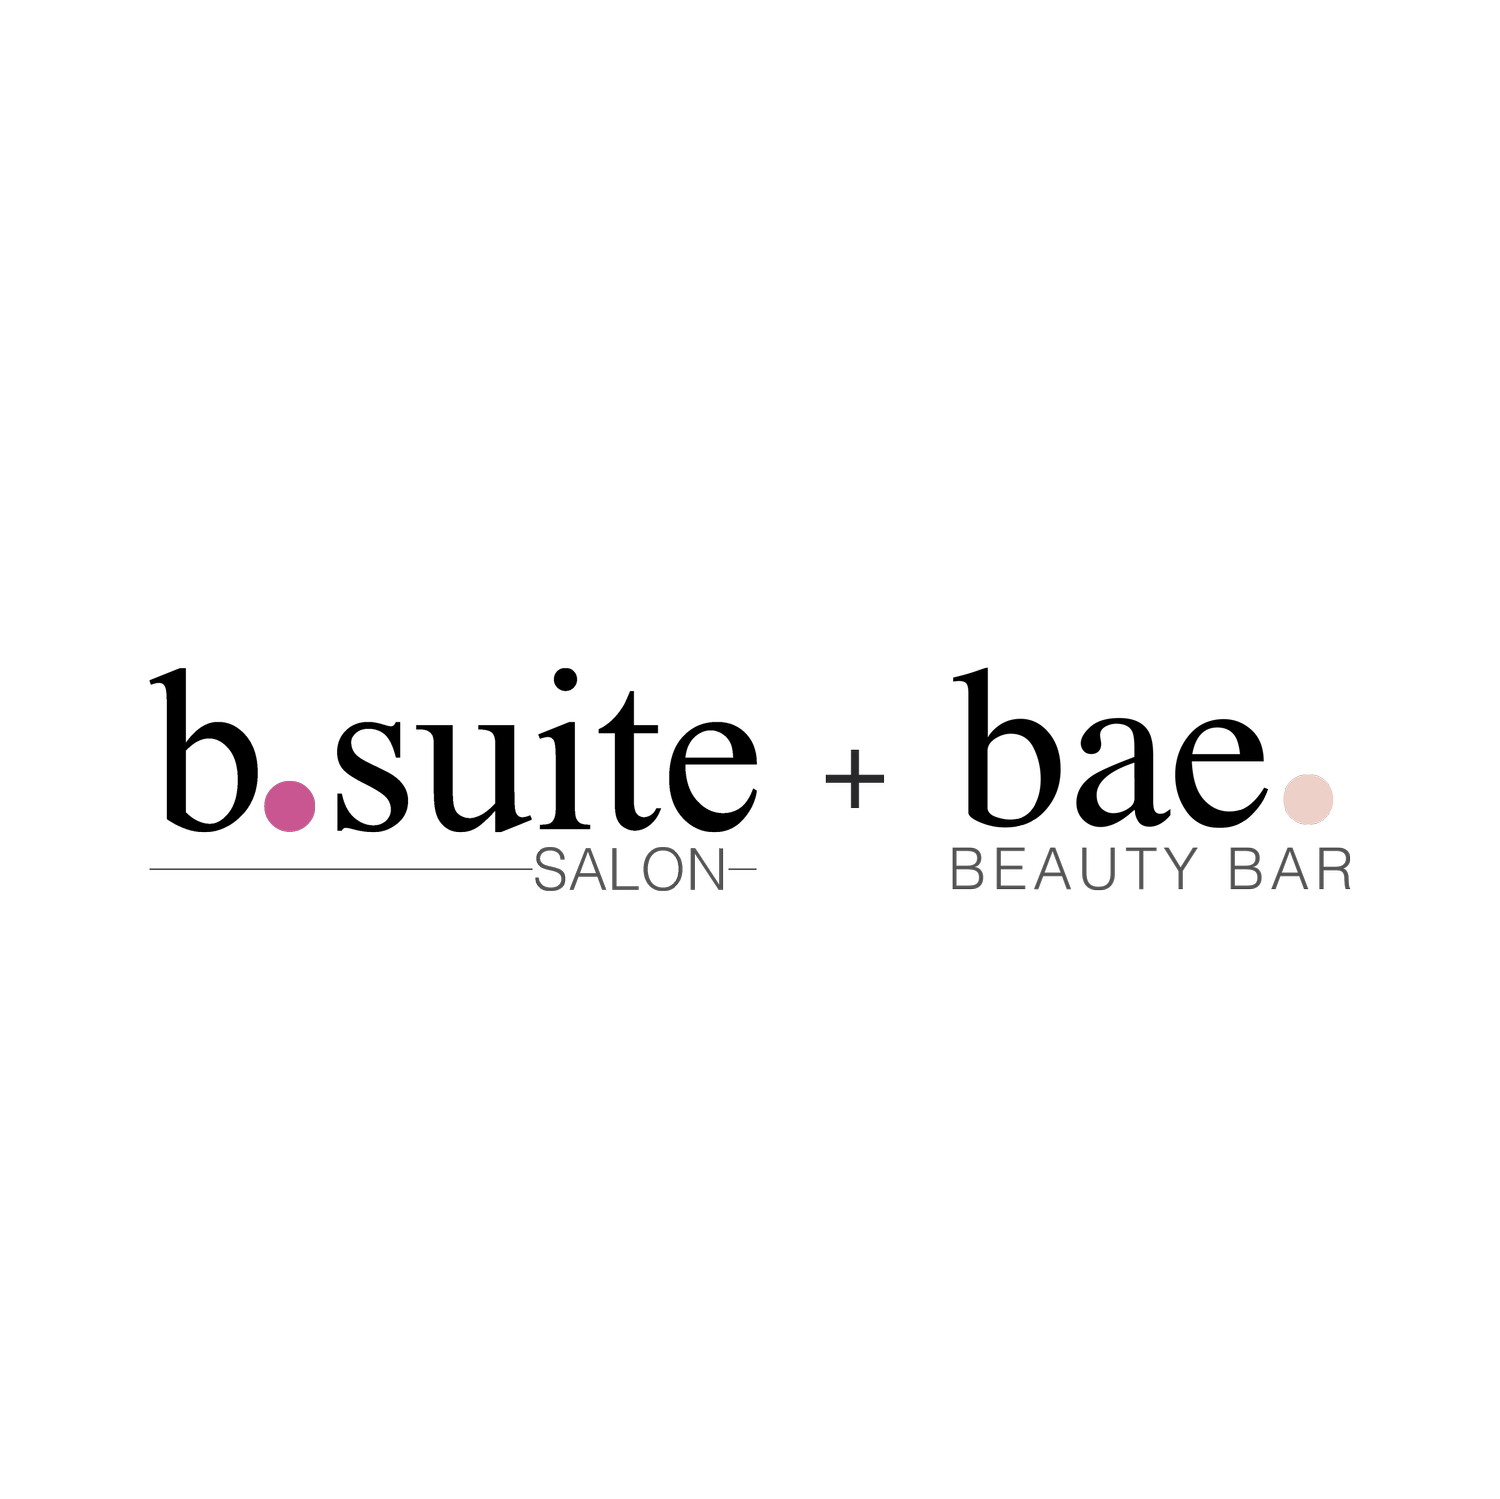 b.suite salon + bae beauty bar